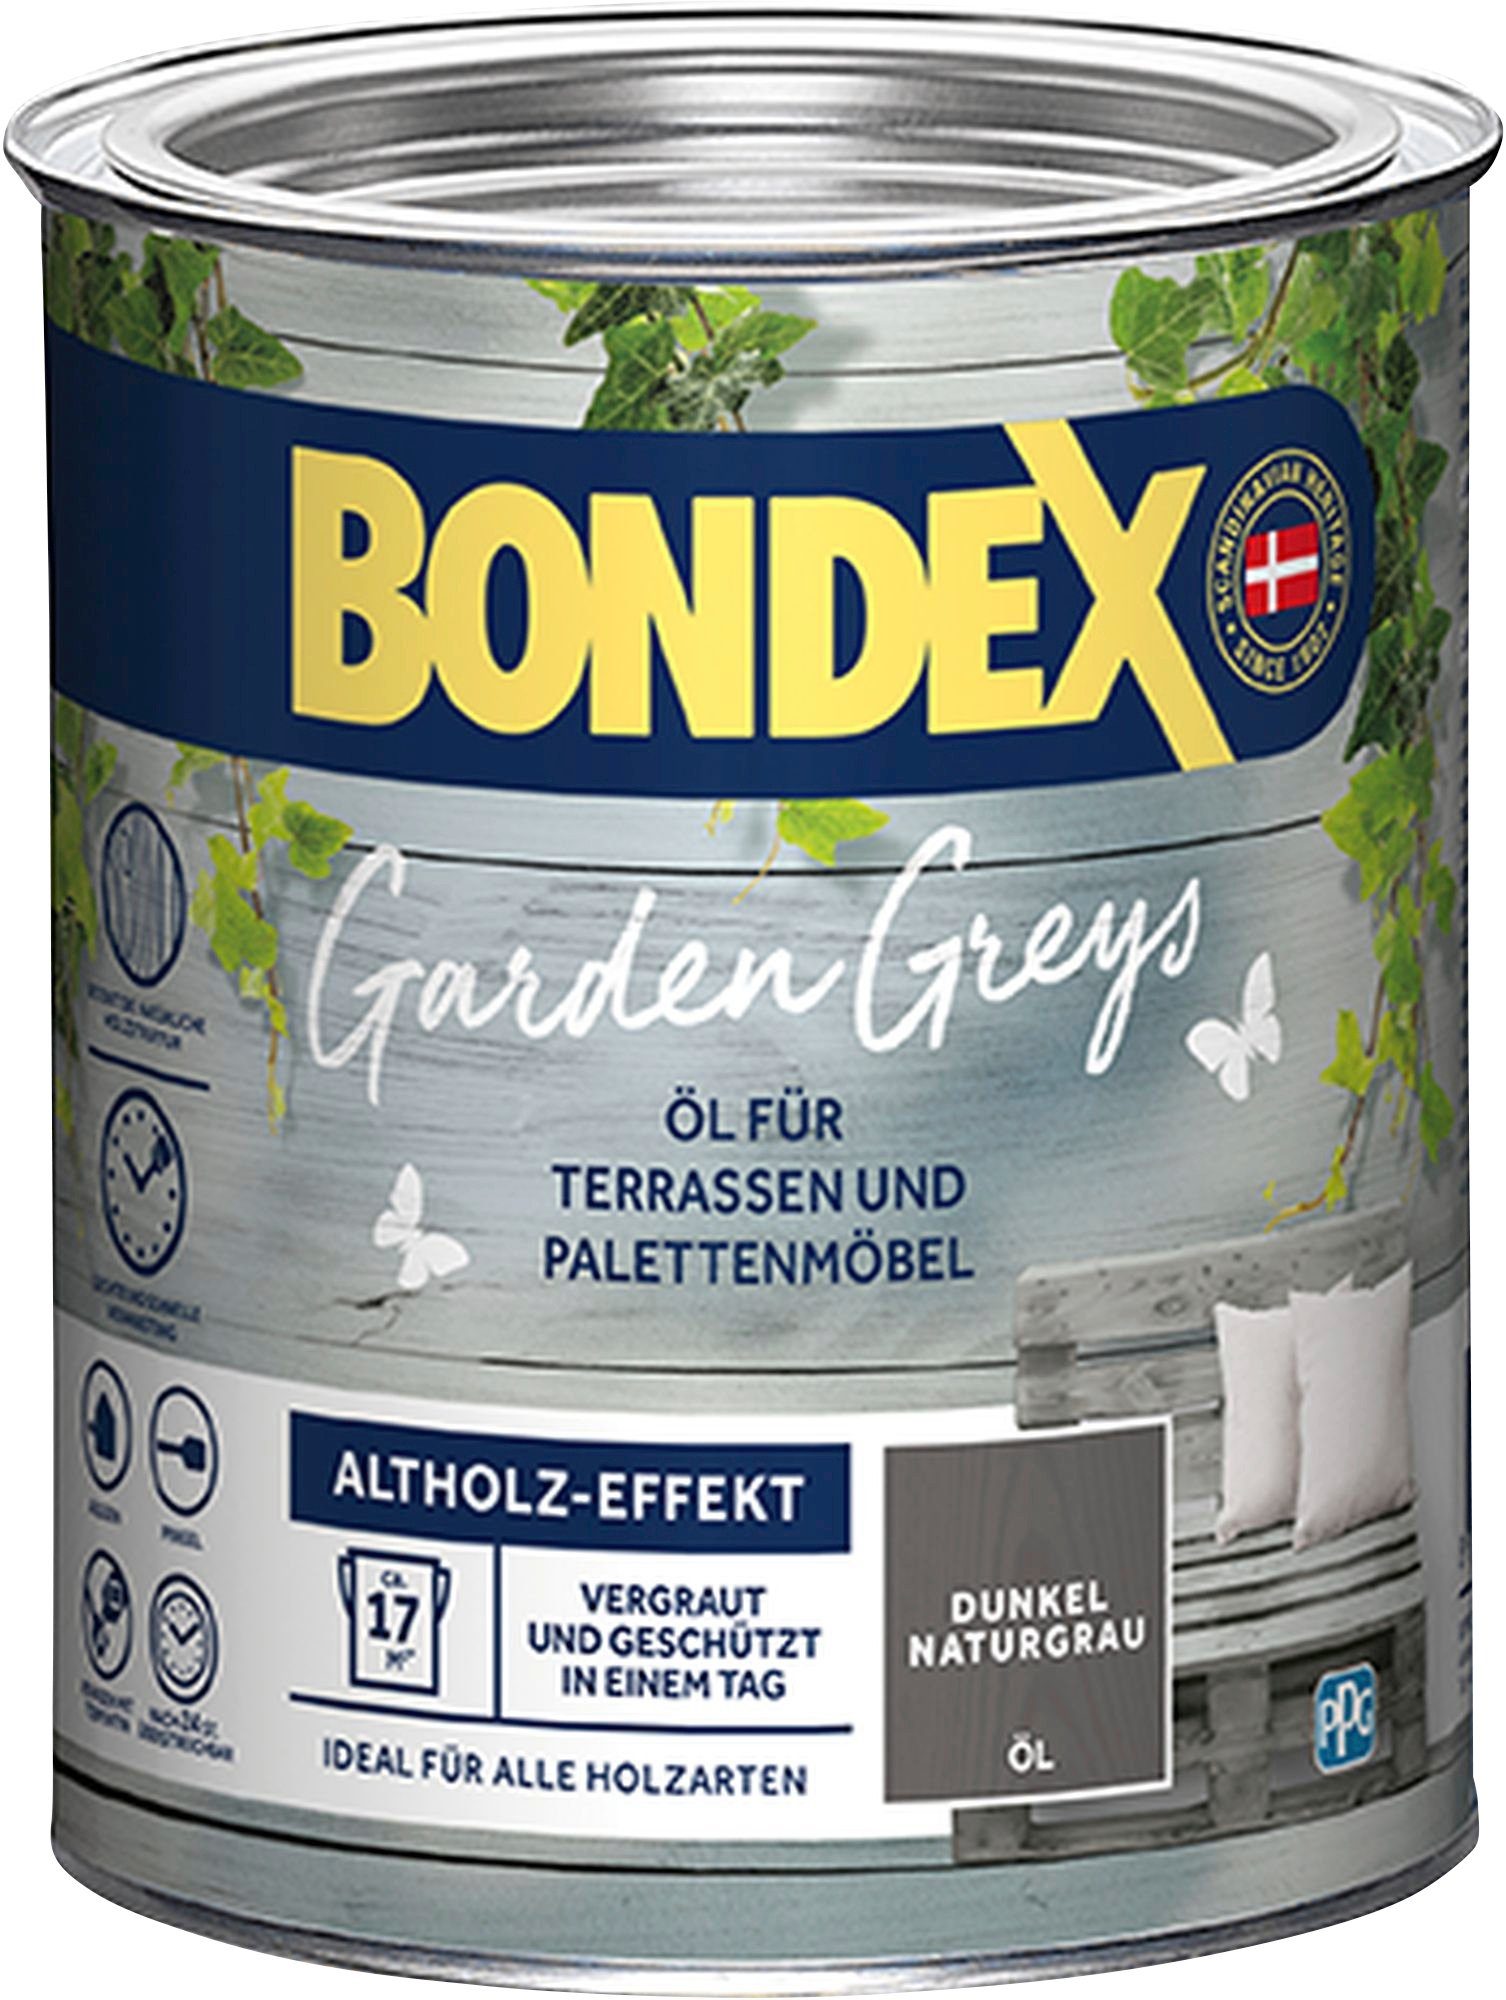 Bondex Holzöl Garden Greys, Treibholz Grau, 0,75 Liter Inhalt Dunkel Naturgrau